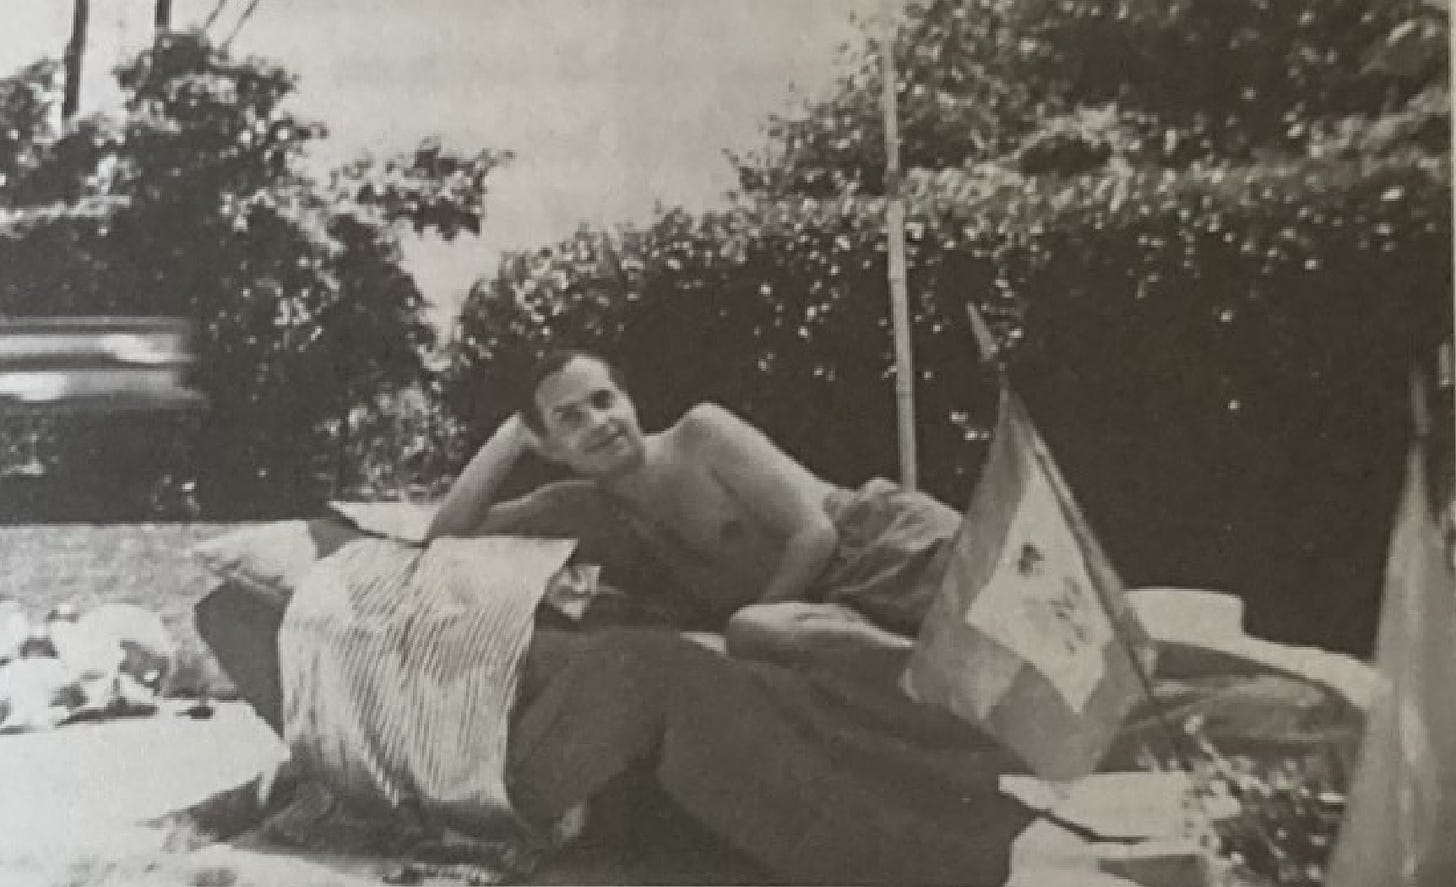 Muensterberger on Shelter Island in 1954.